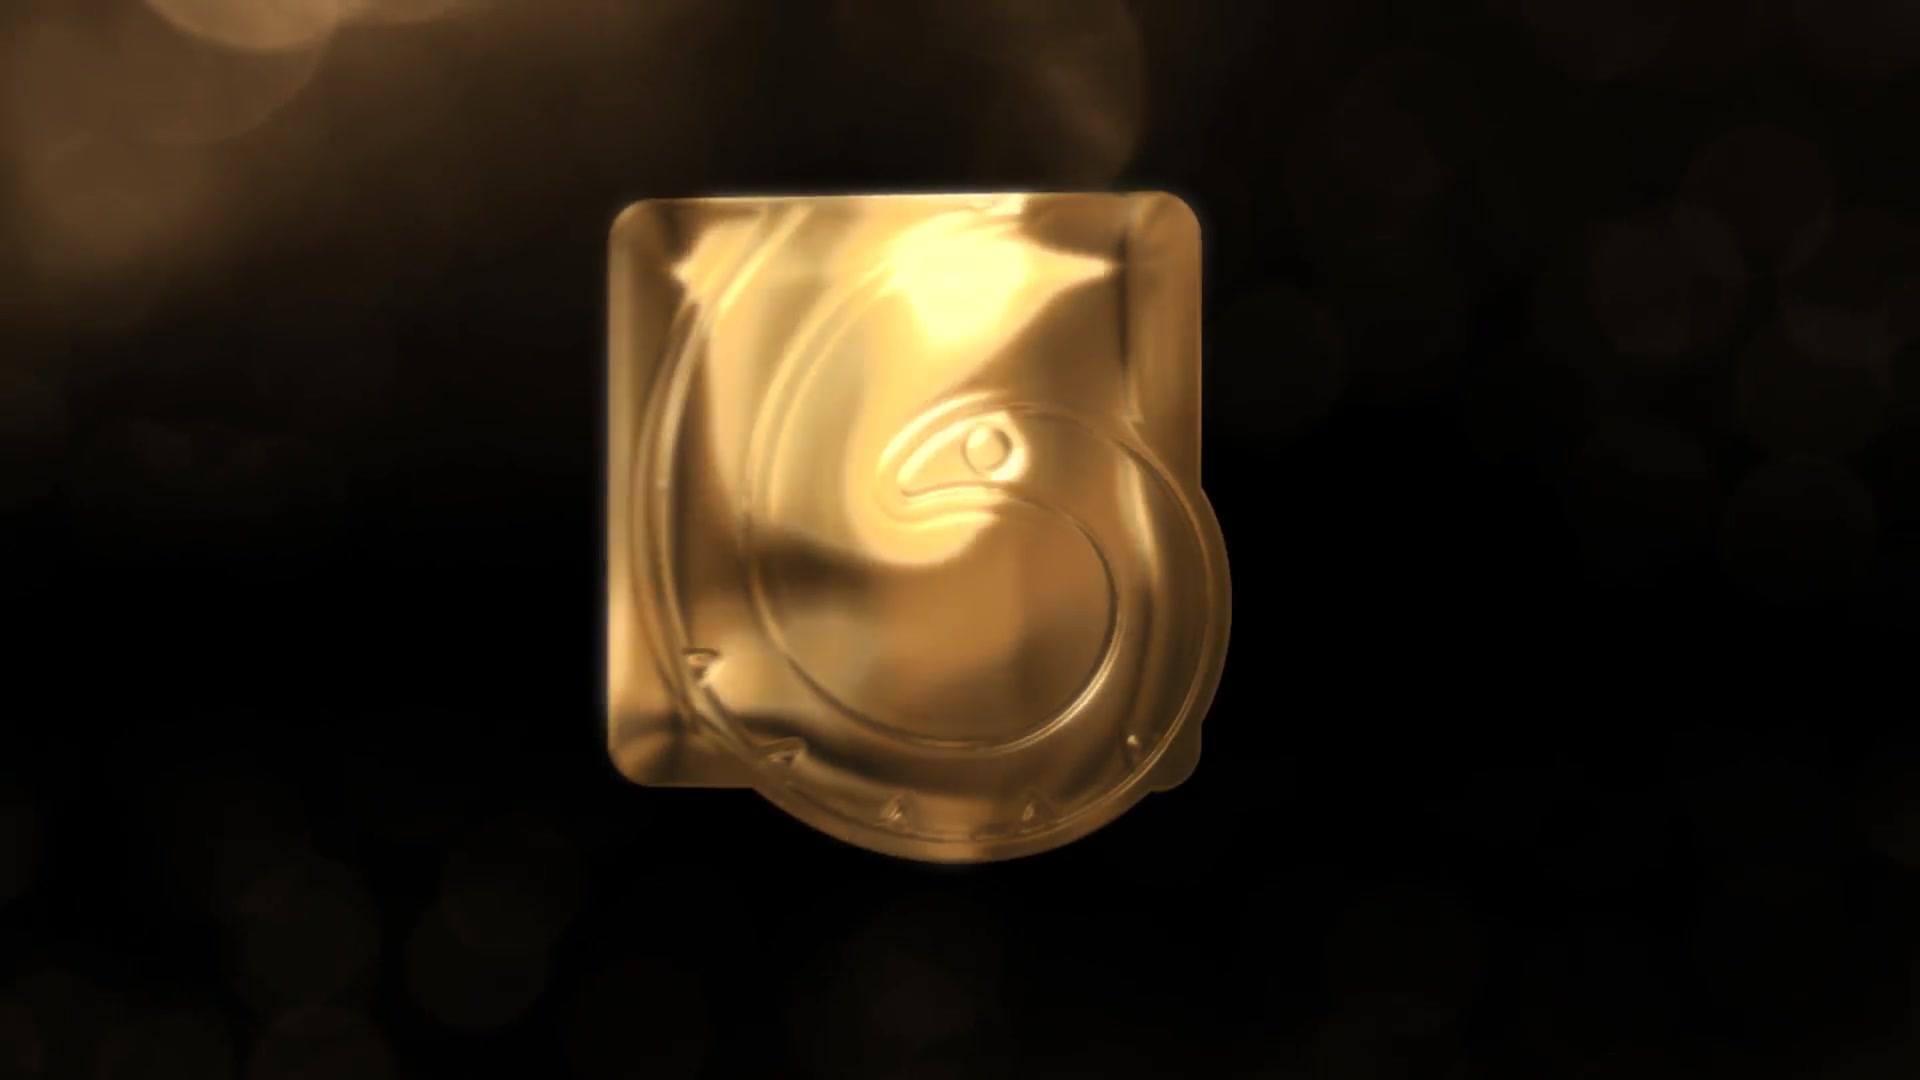 Elegant Gold Logo Reveal - Download Videohive 20274553